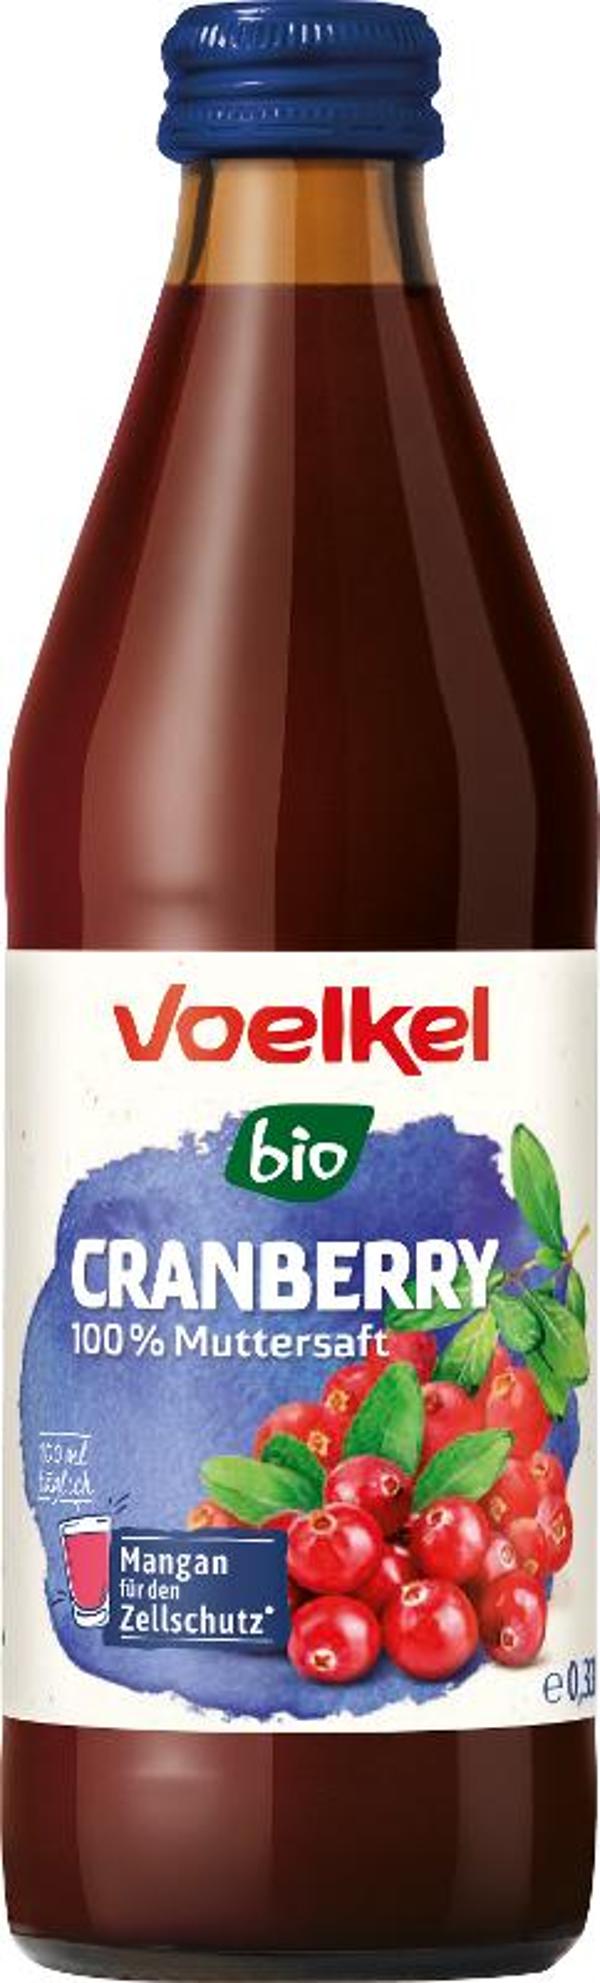 Produktfoto zu Cranberry-Saft pur 0,33l